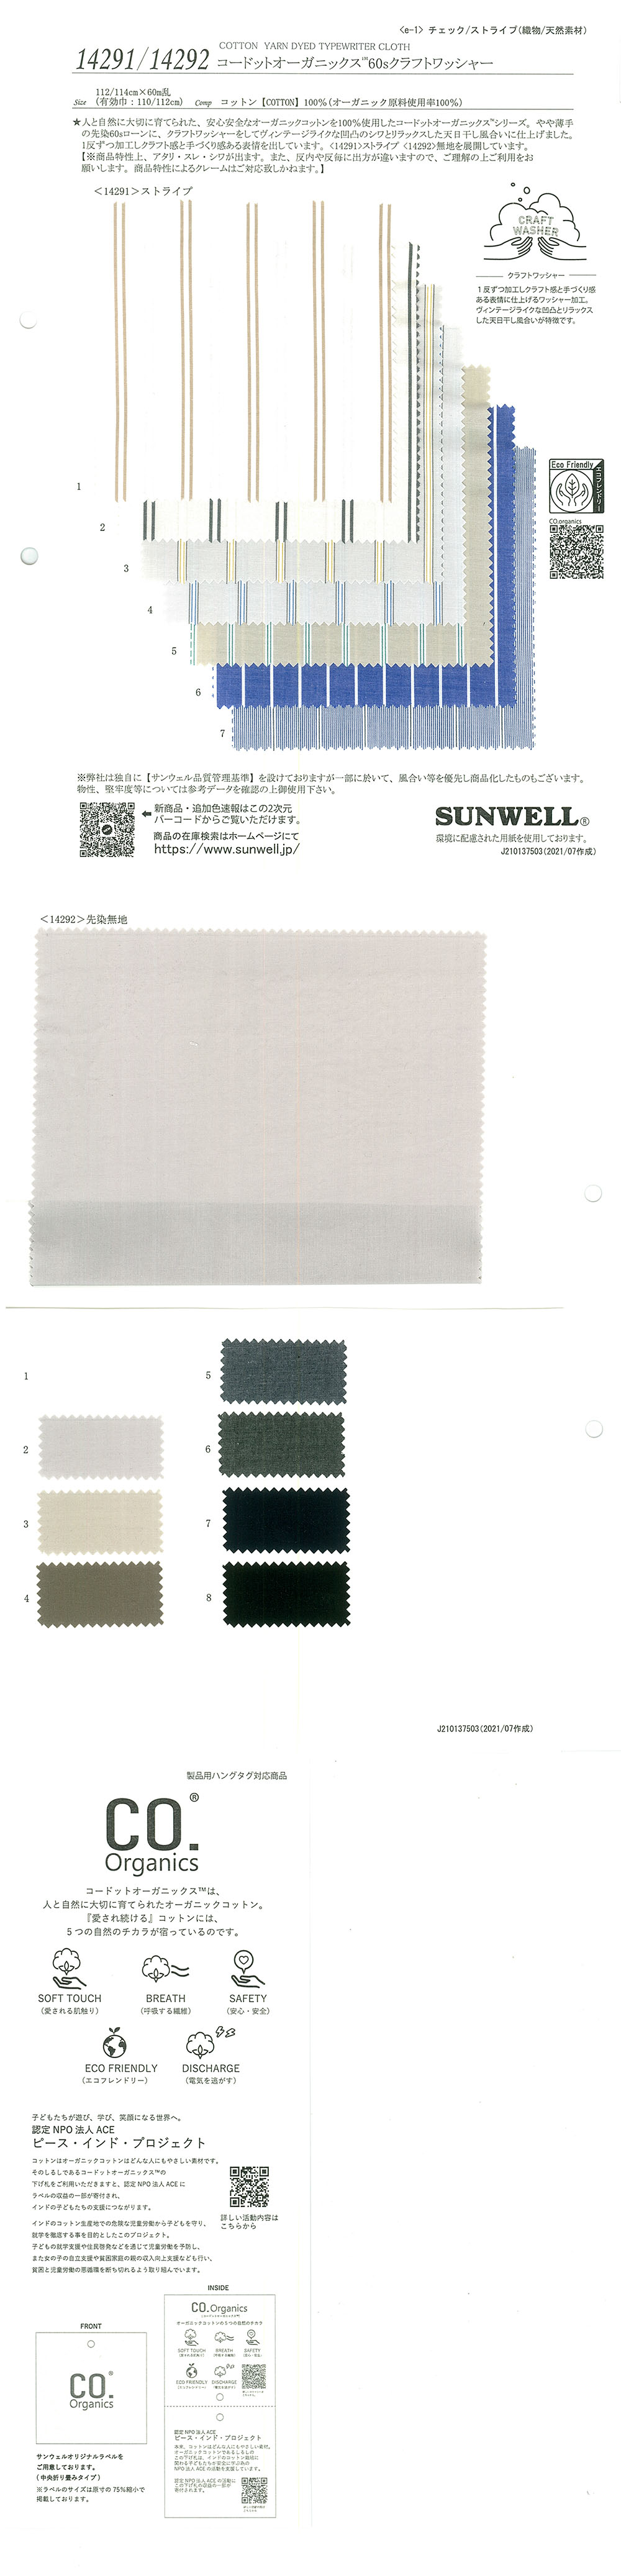 14292 Cordot Organics (R) 60 Single Thread Craft Washer Processing[Textile / Fabric] SUNWELL